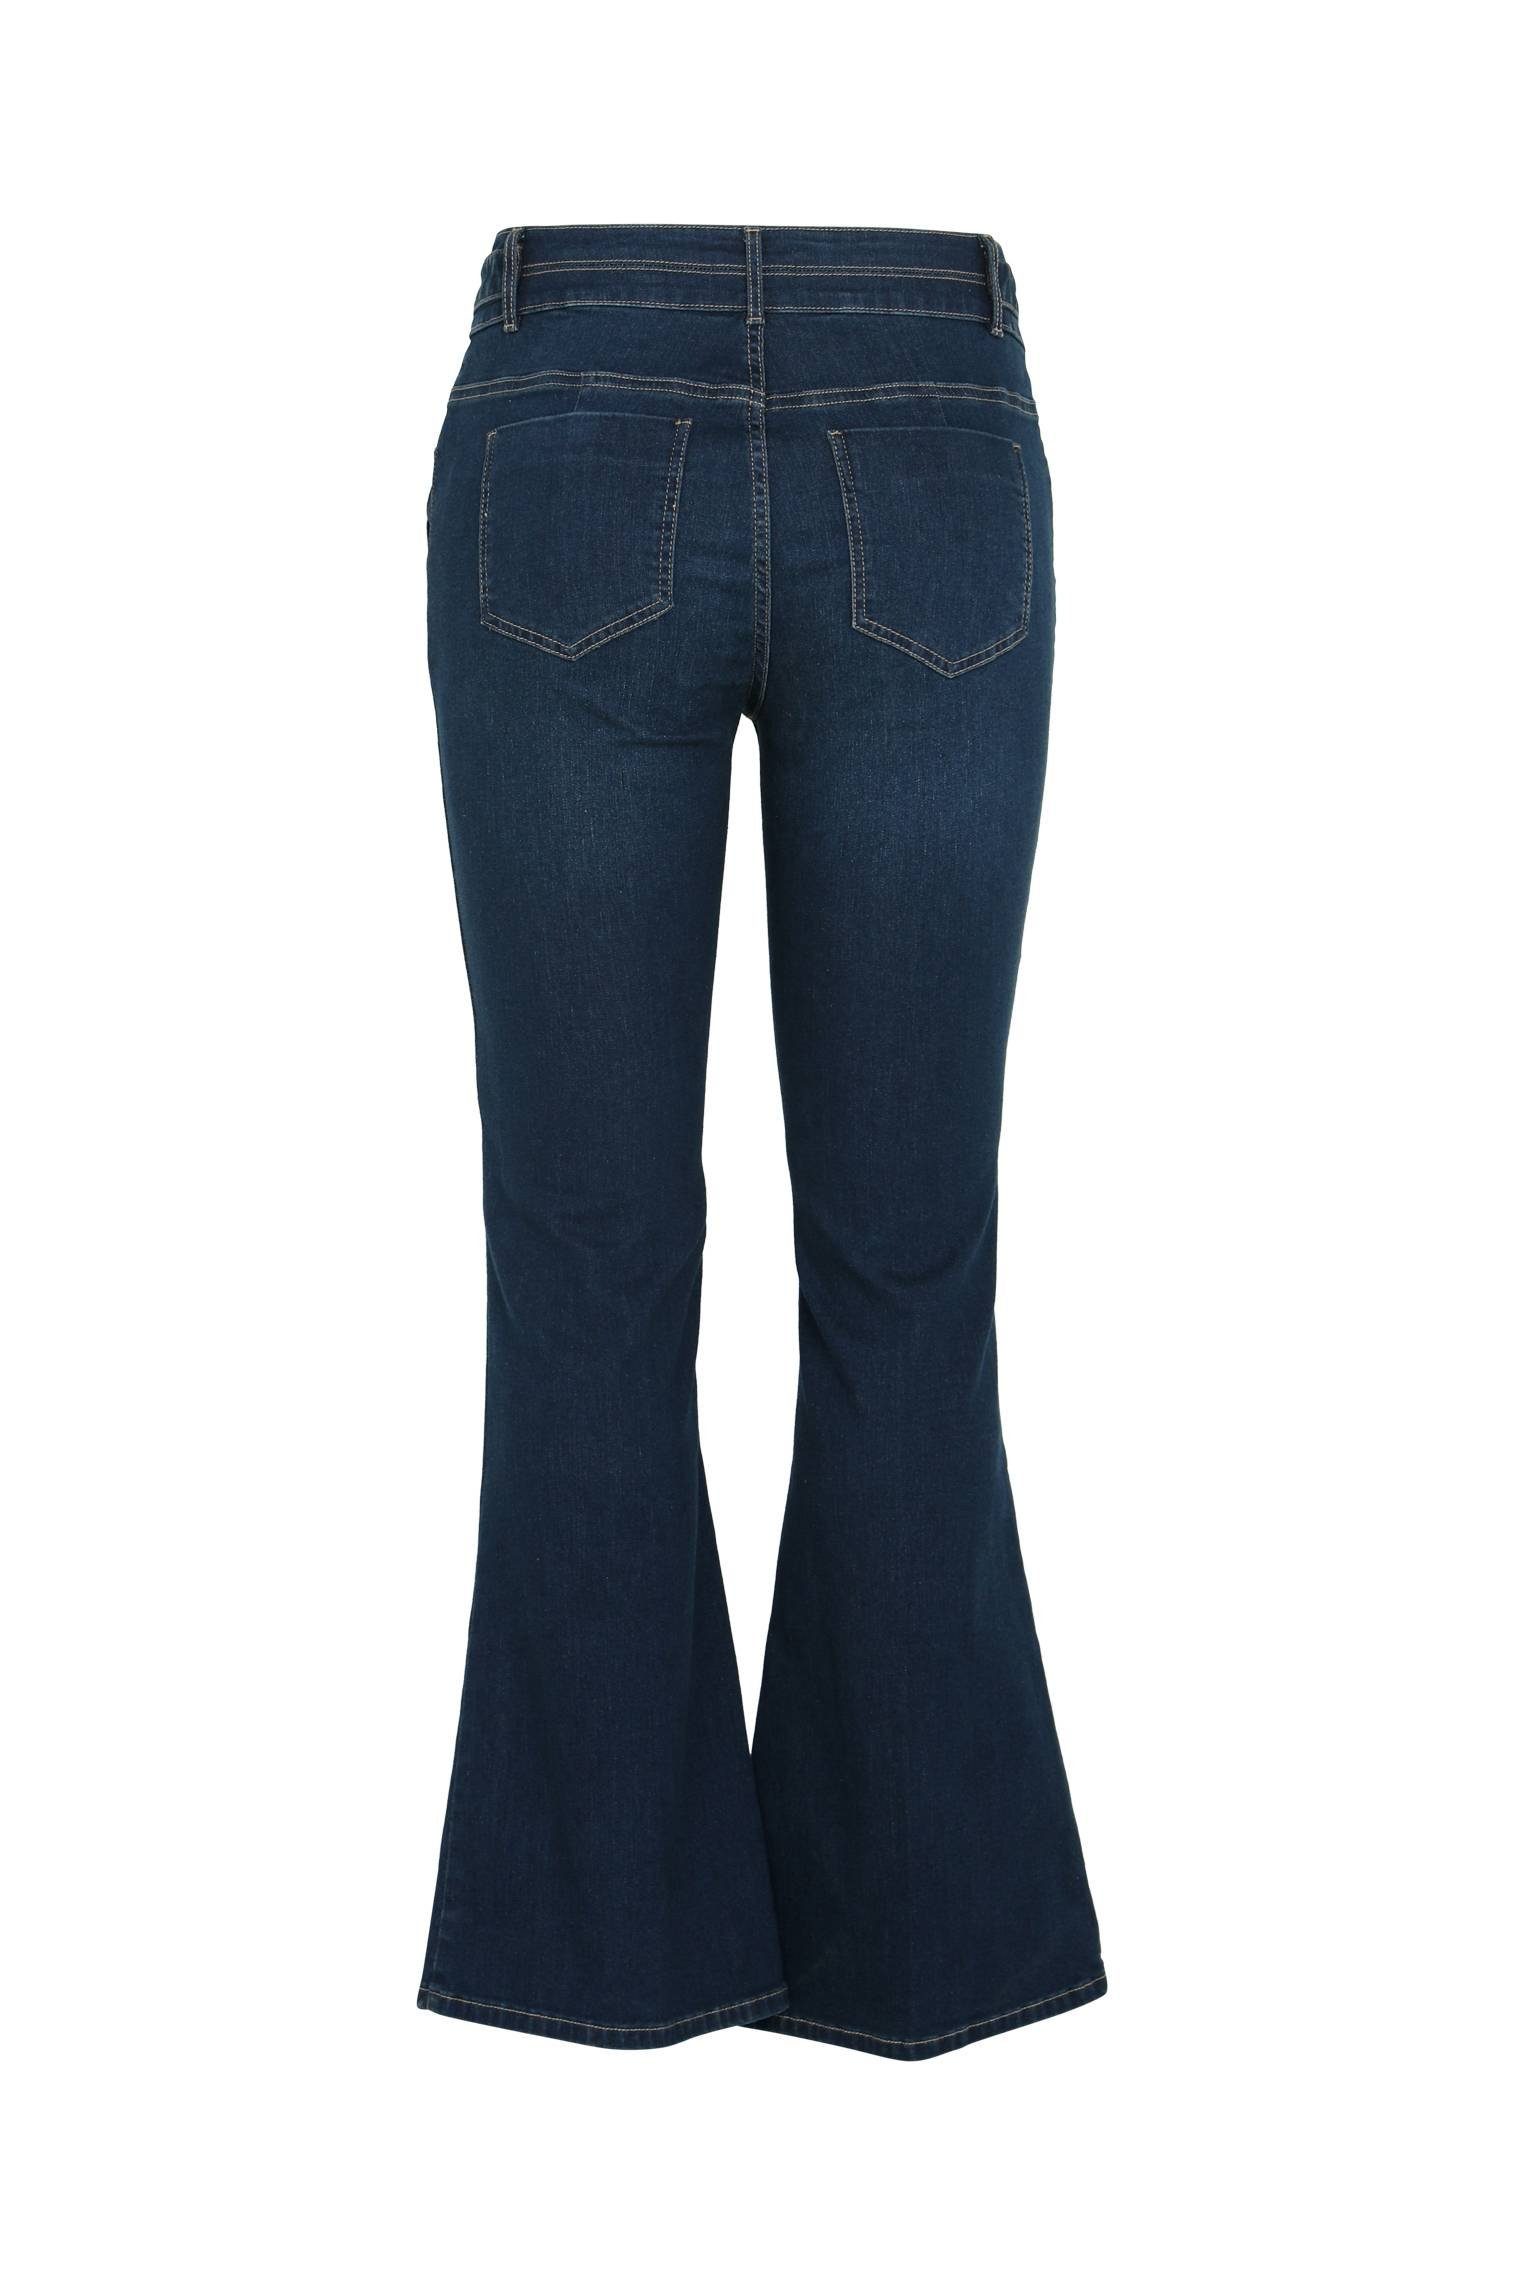 5-Pocket-Jeans Paprika Flavie